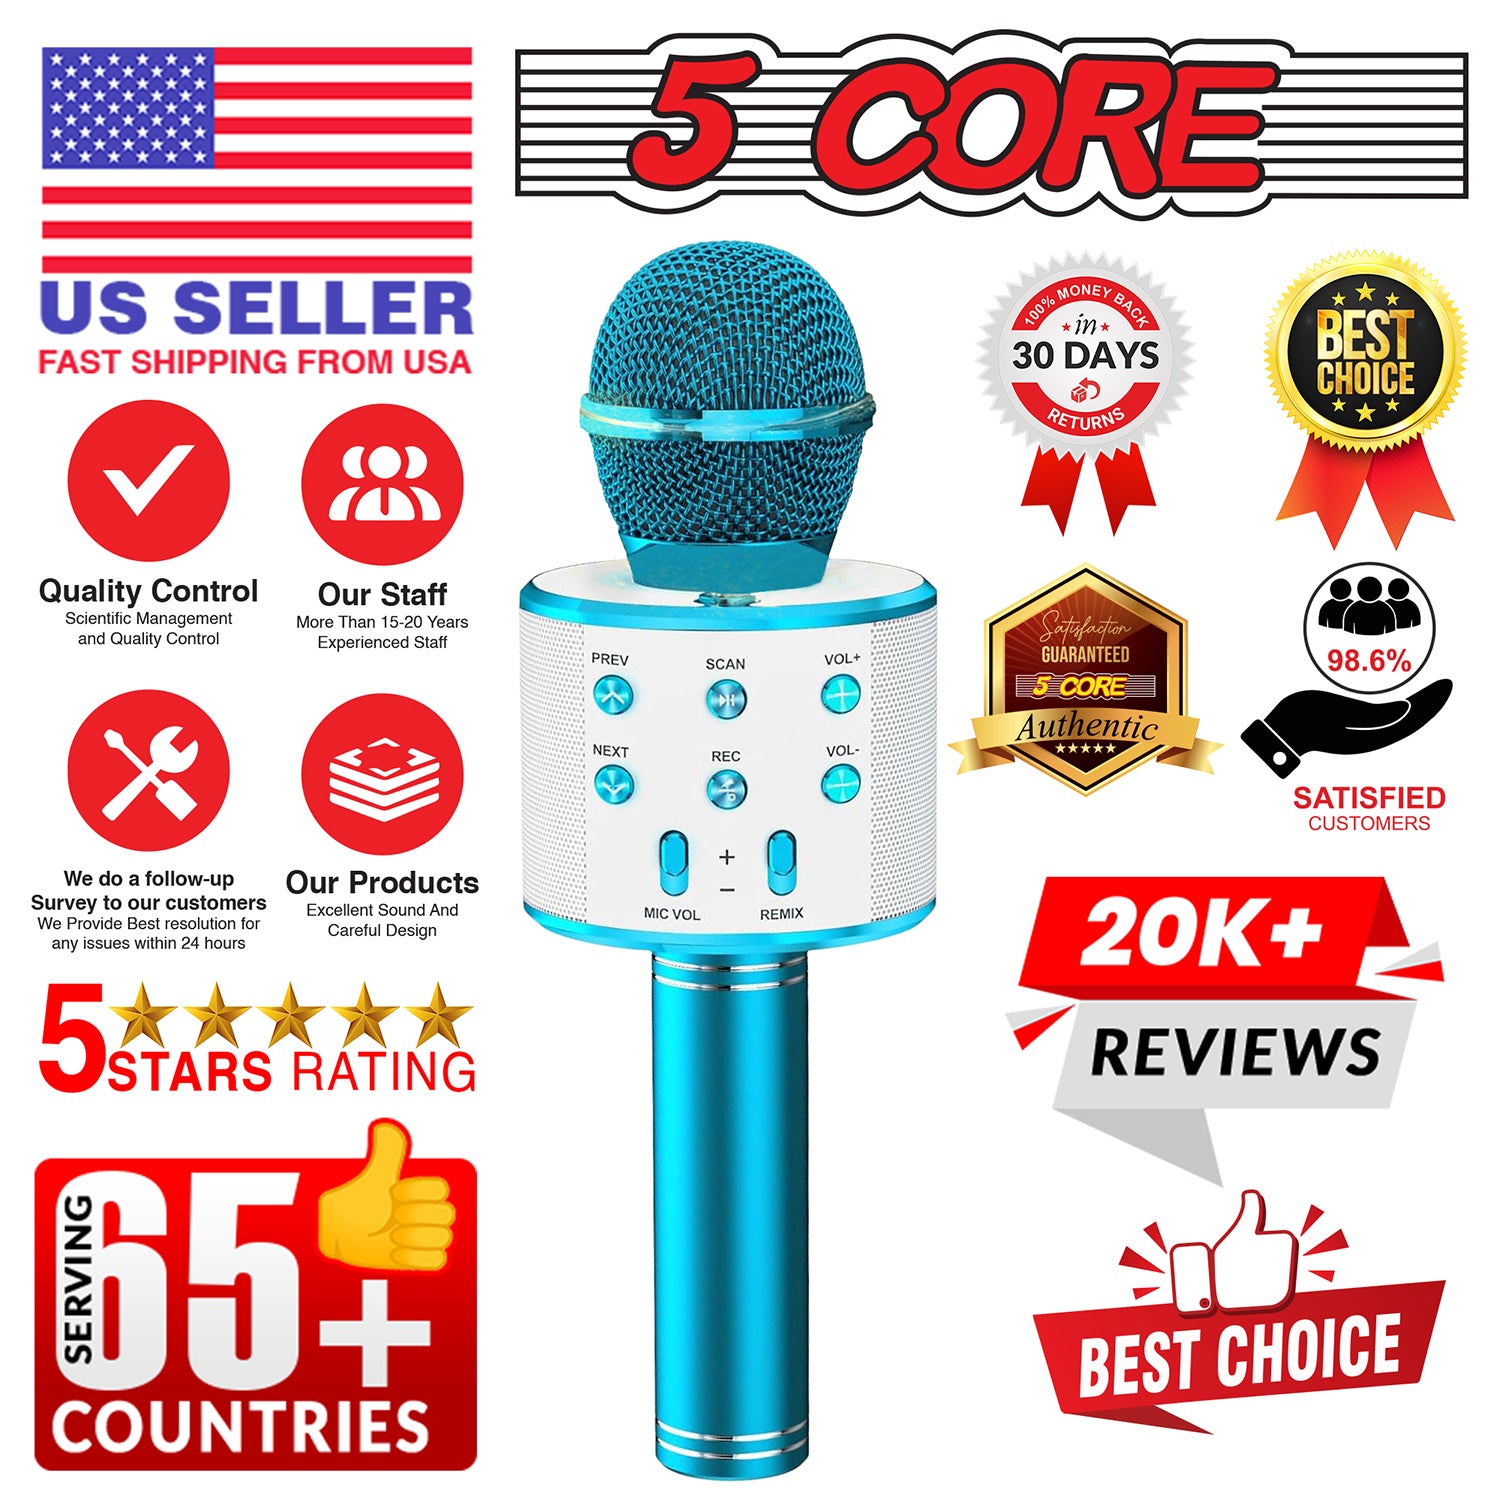 5 Core Karaoke Wireless Microphones Microfono Inalambrico Toy w Stereo Speaker SD Card & USB Playback